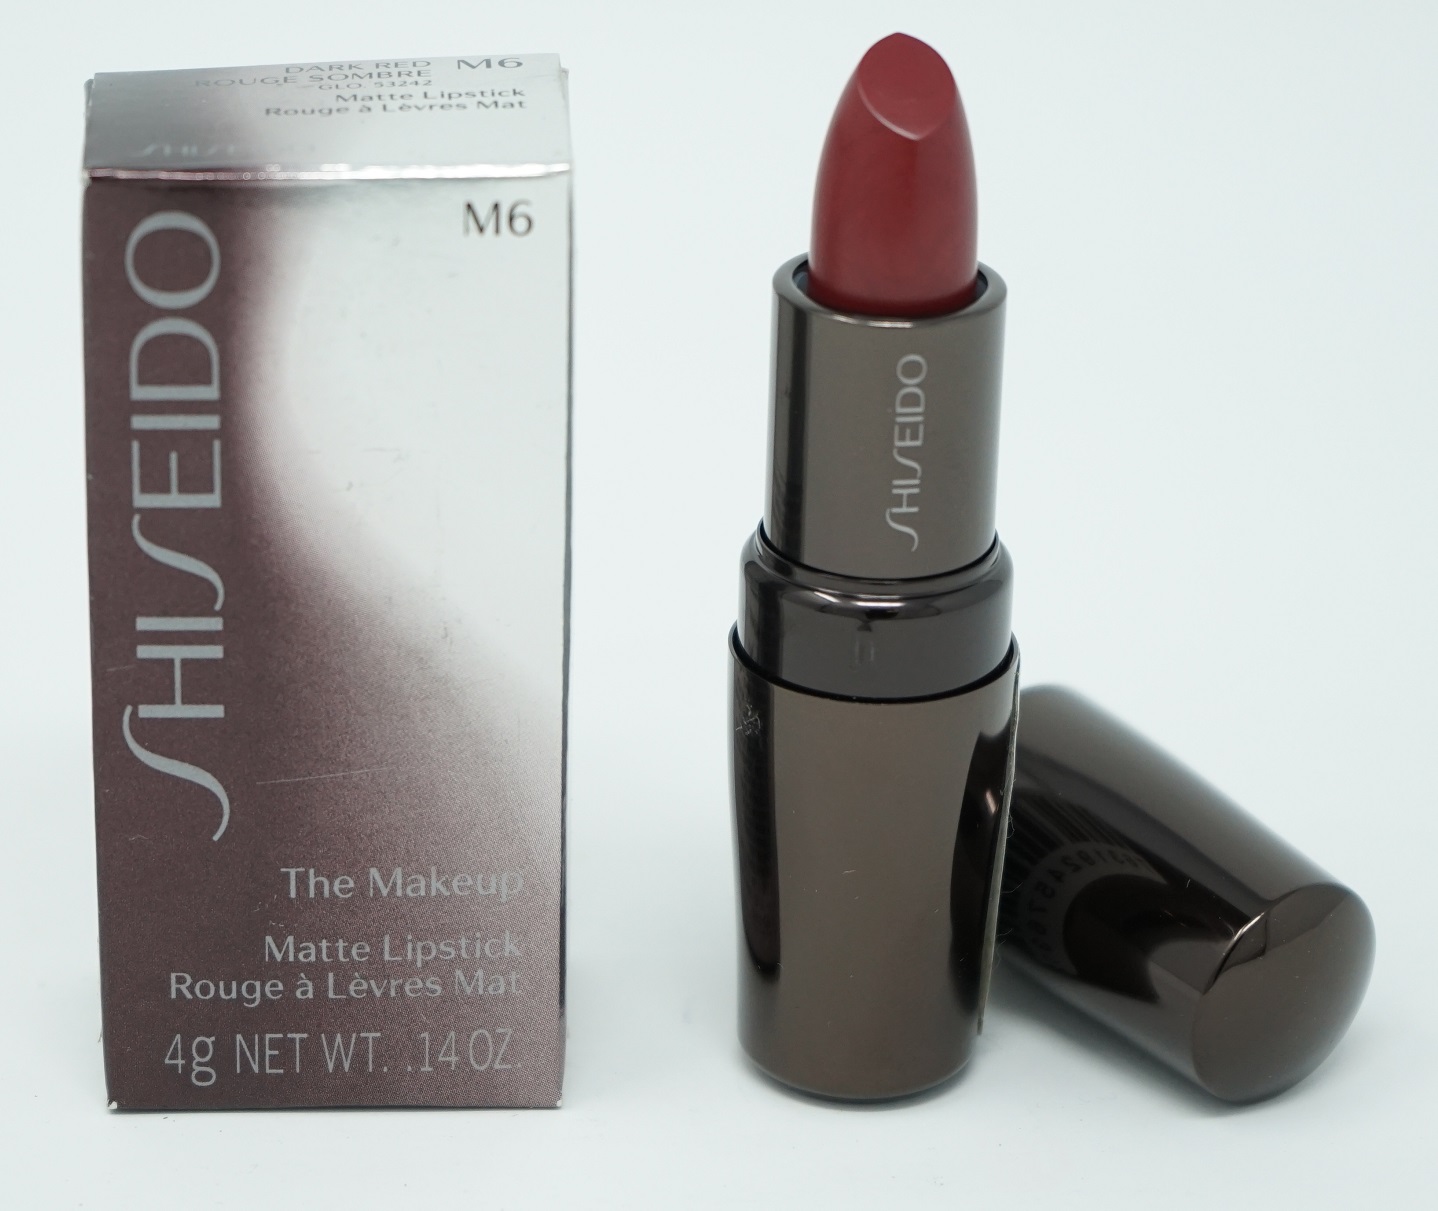 shiseido The Makeup  Matte Lipstick M6 Dark Red